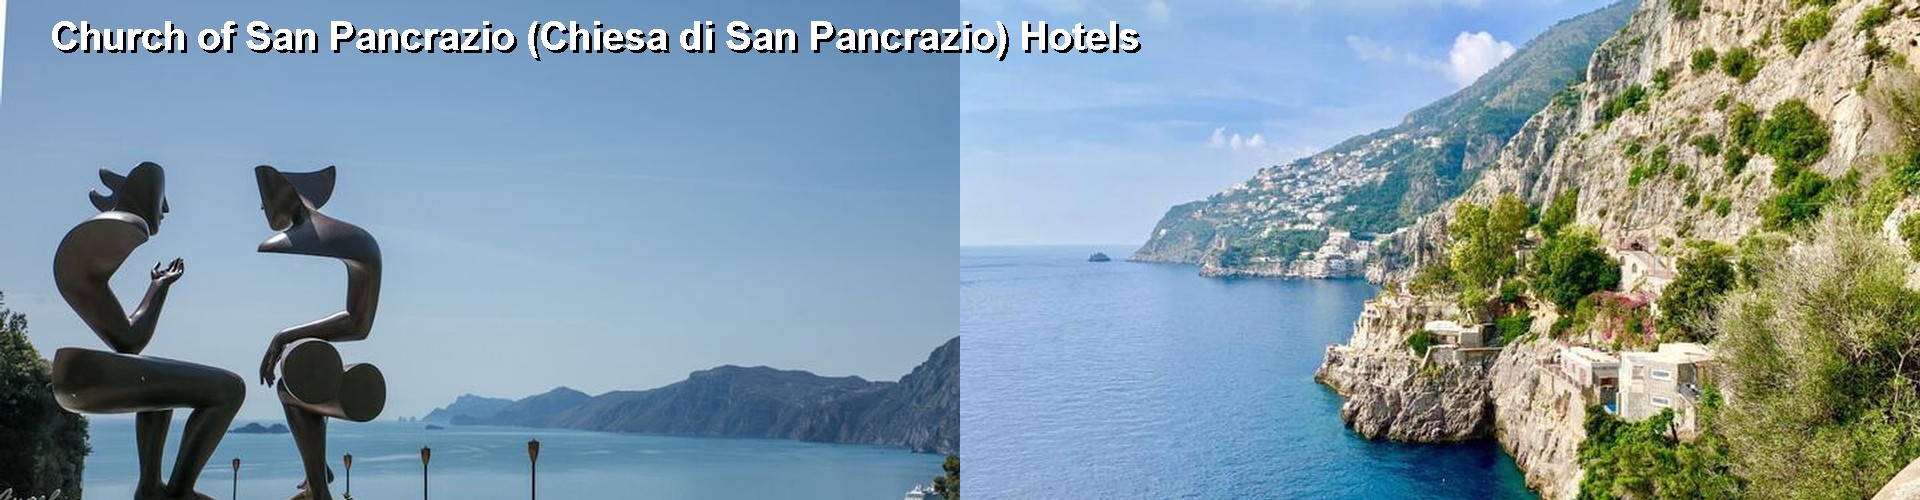 5 Best Hotels near Church of San Pancrazio (Chiesa di San Pancrazio)